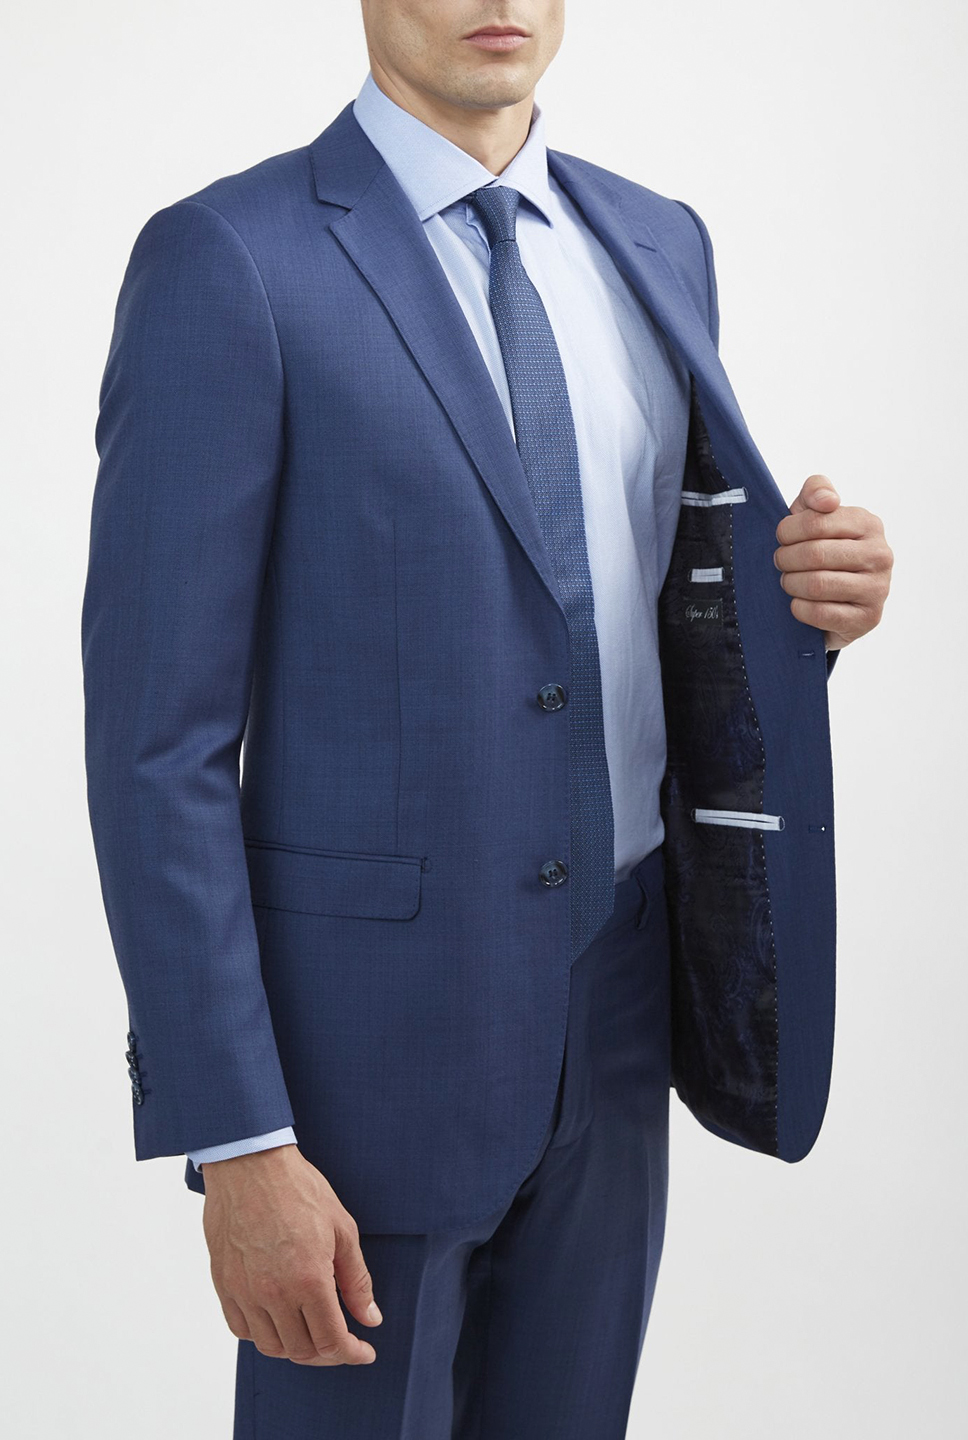 Portofino French Blue Suit 2